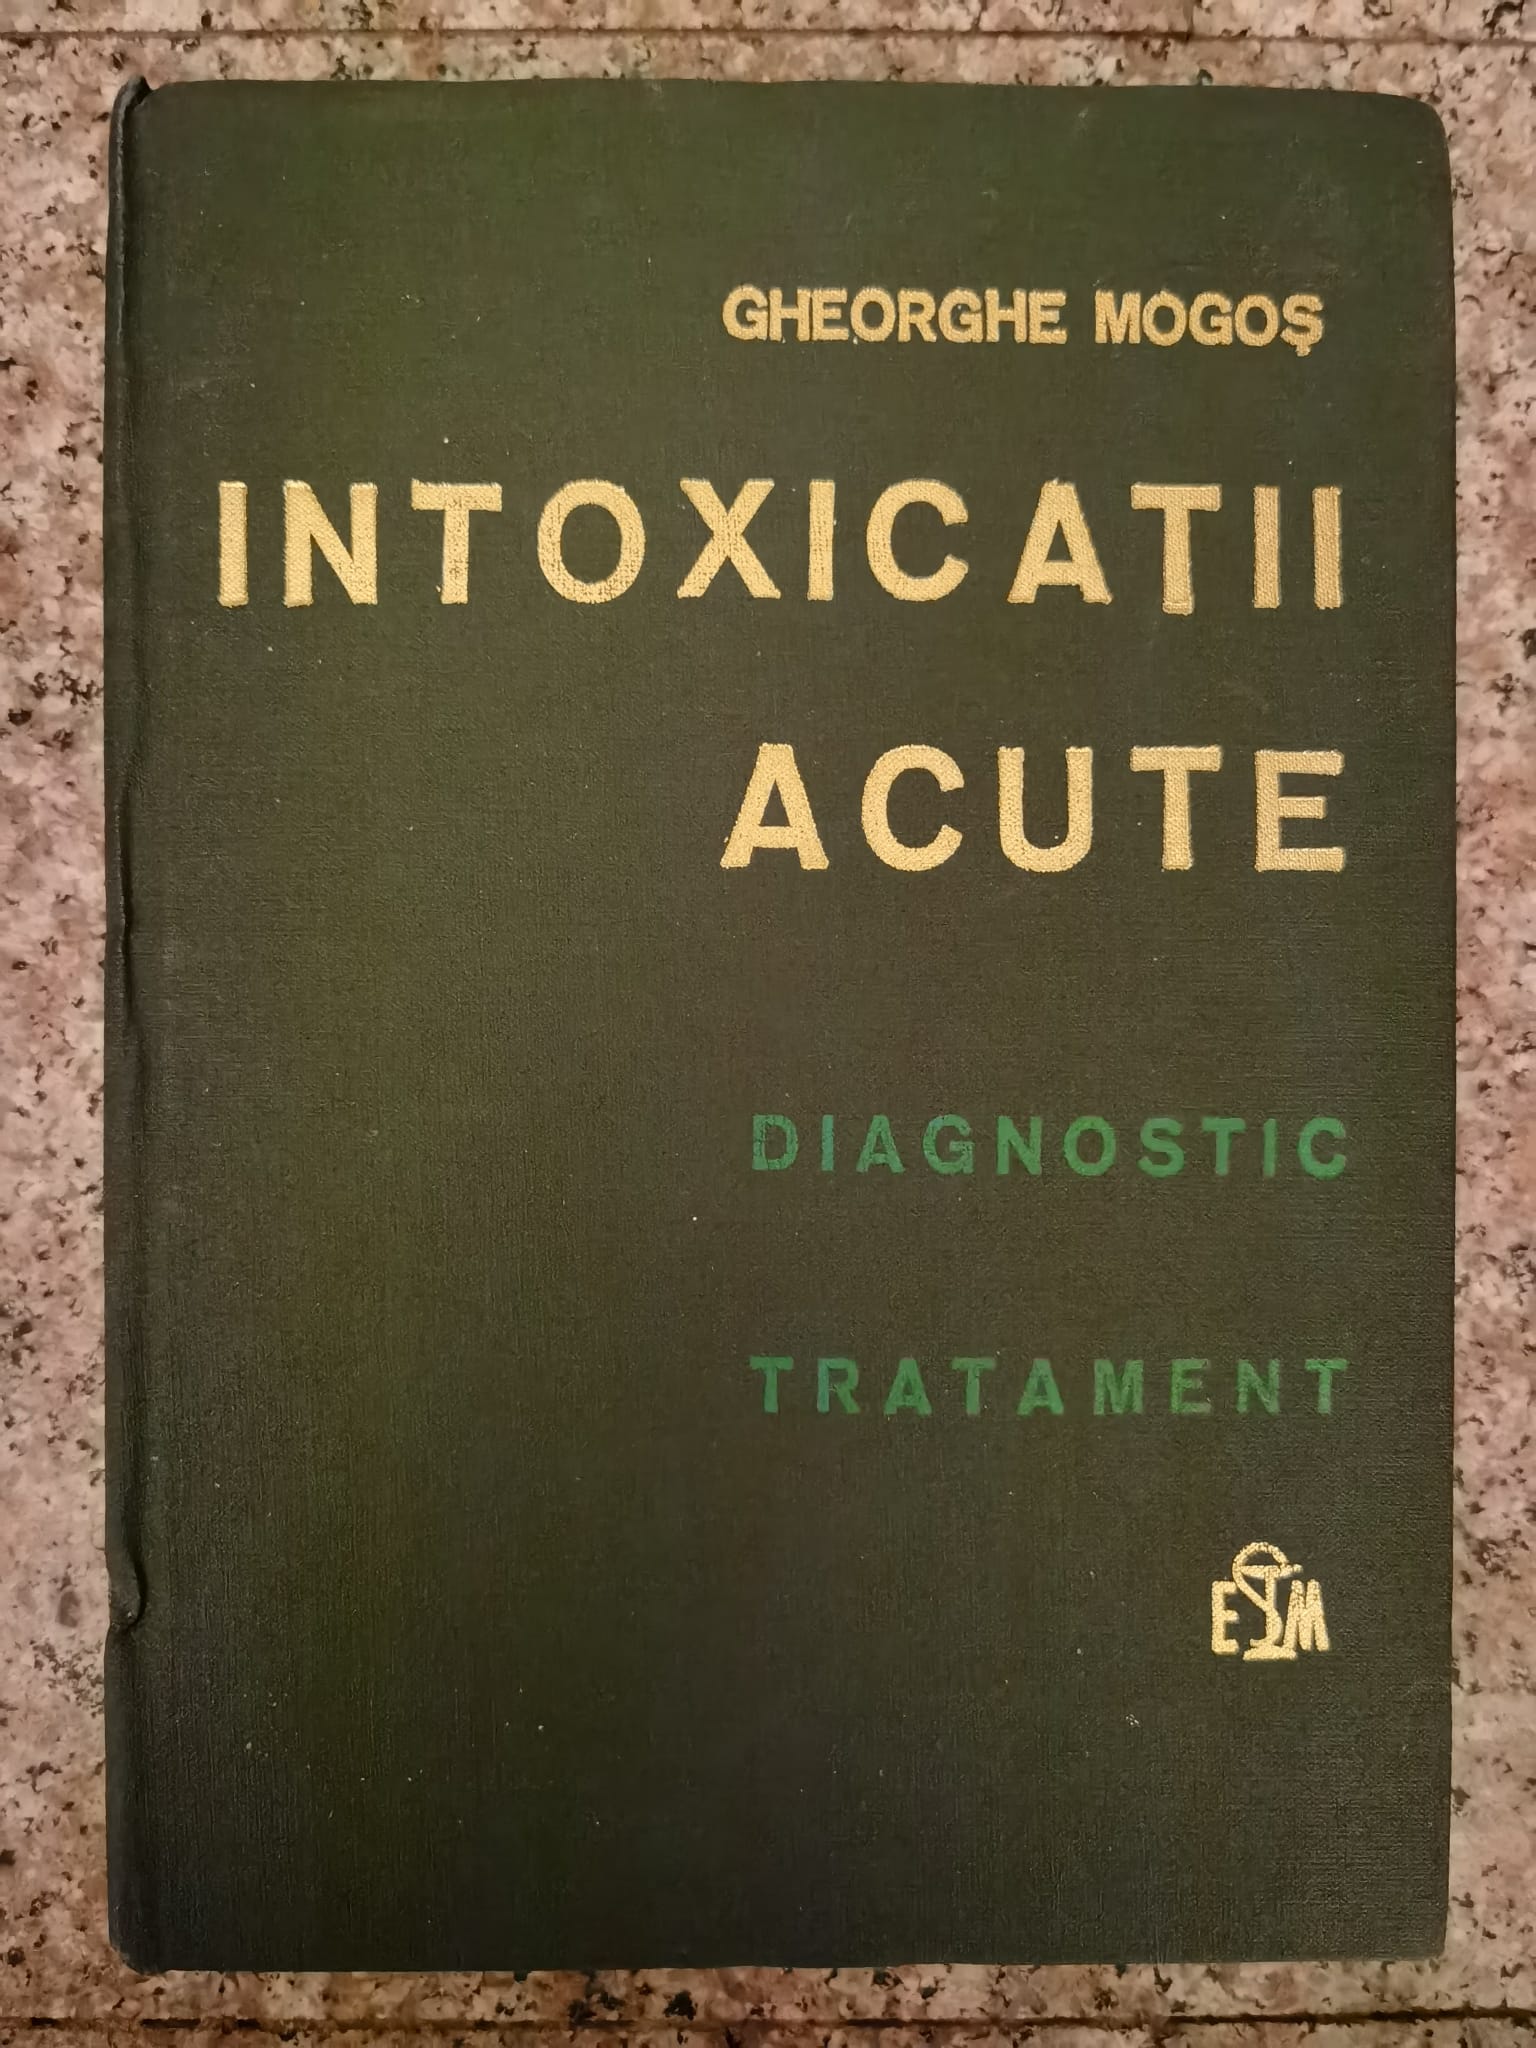 intoxicatii acute diagnostic tratament                                                               gheorghe mogos                                                                                      